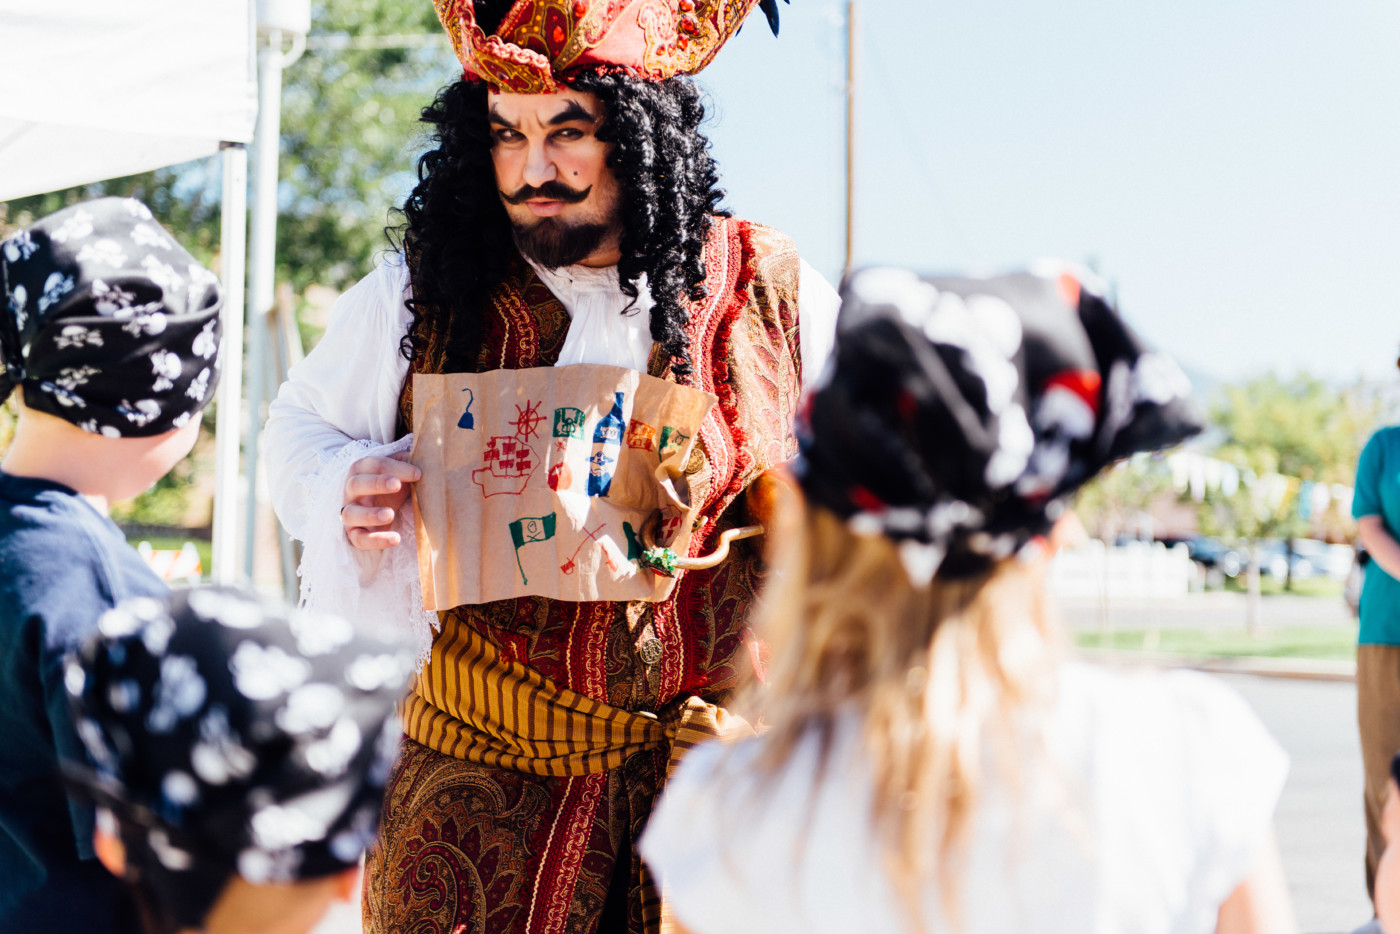 Fairytale Festival Pirate